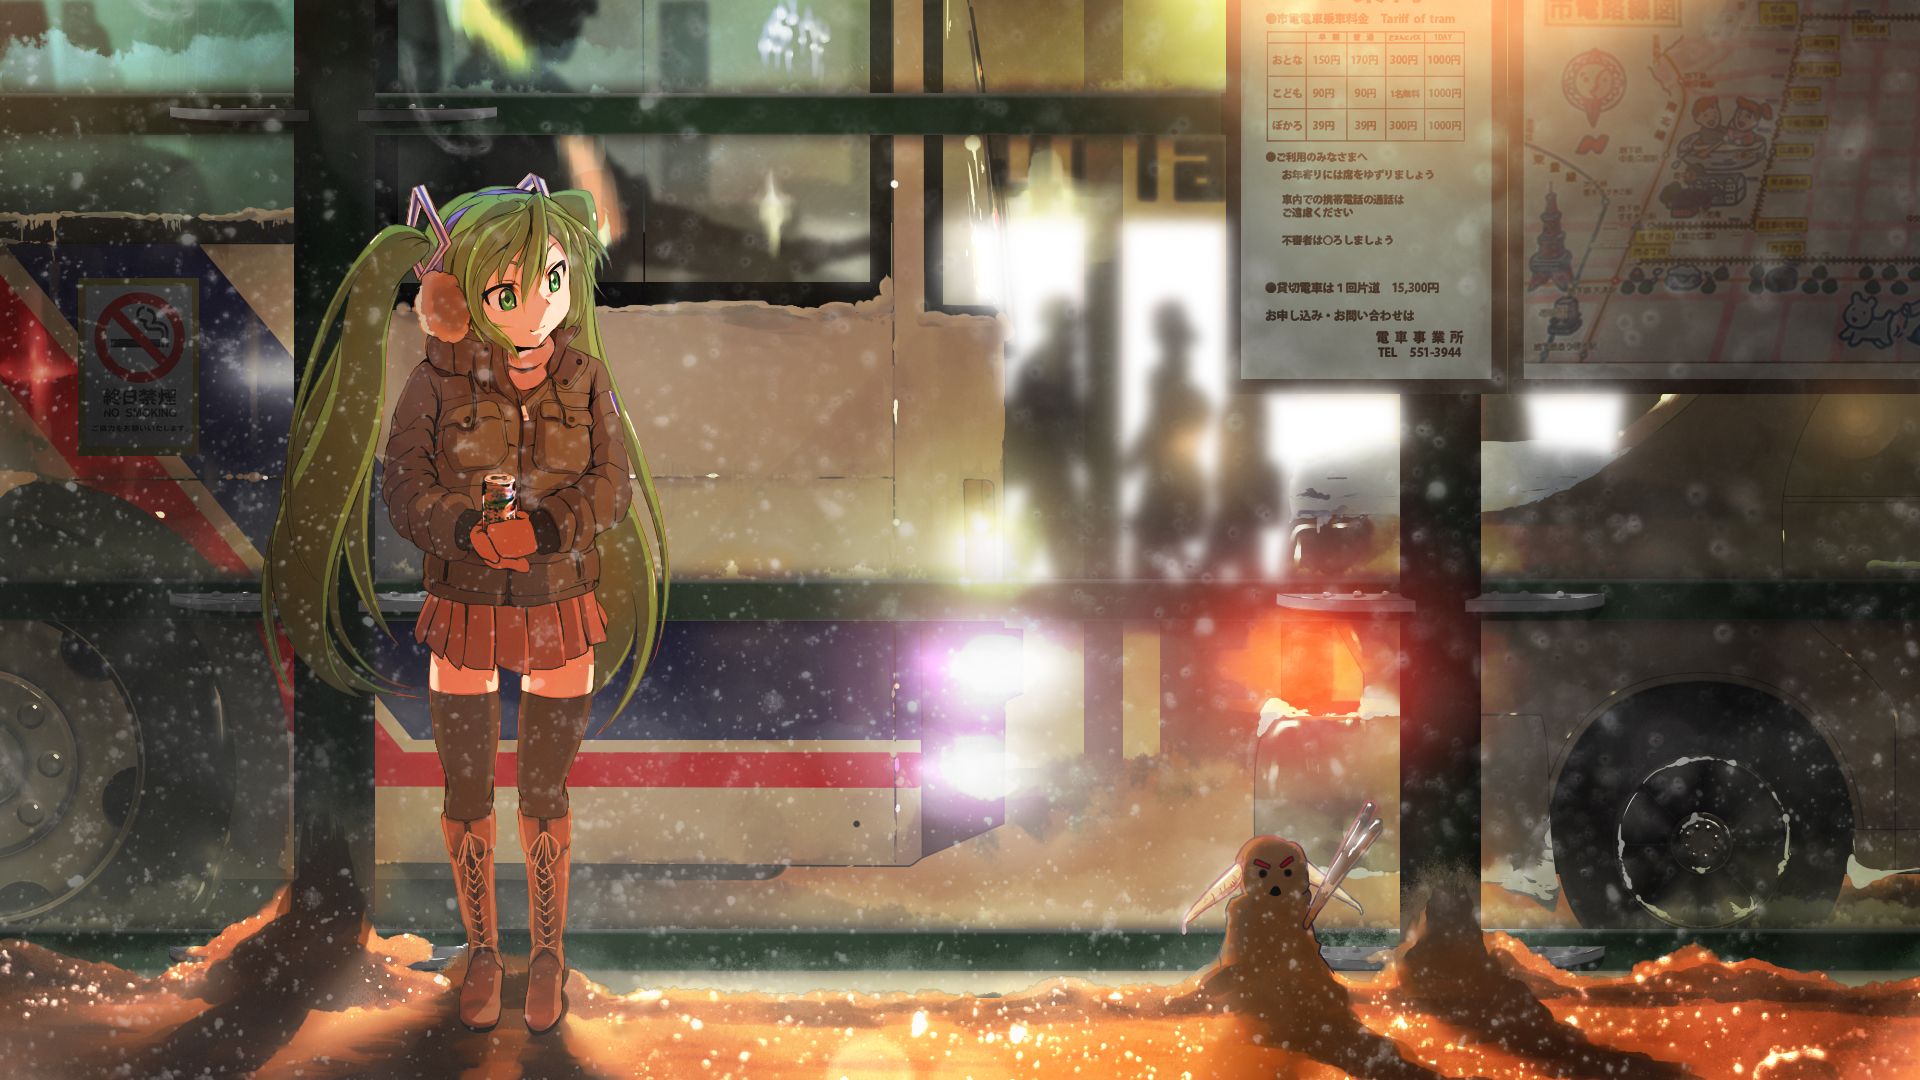 Anime Girl In Snow HD Wallpaperx1080